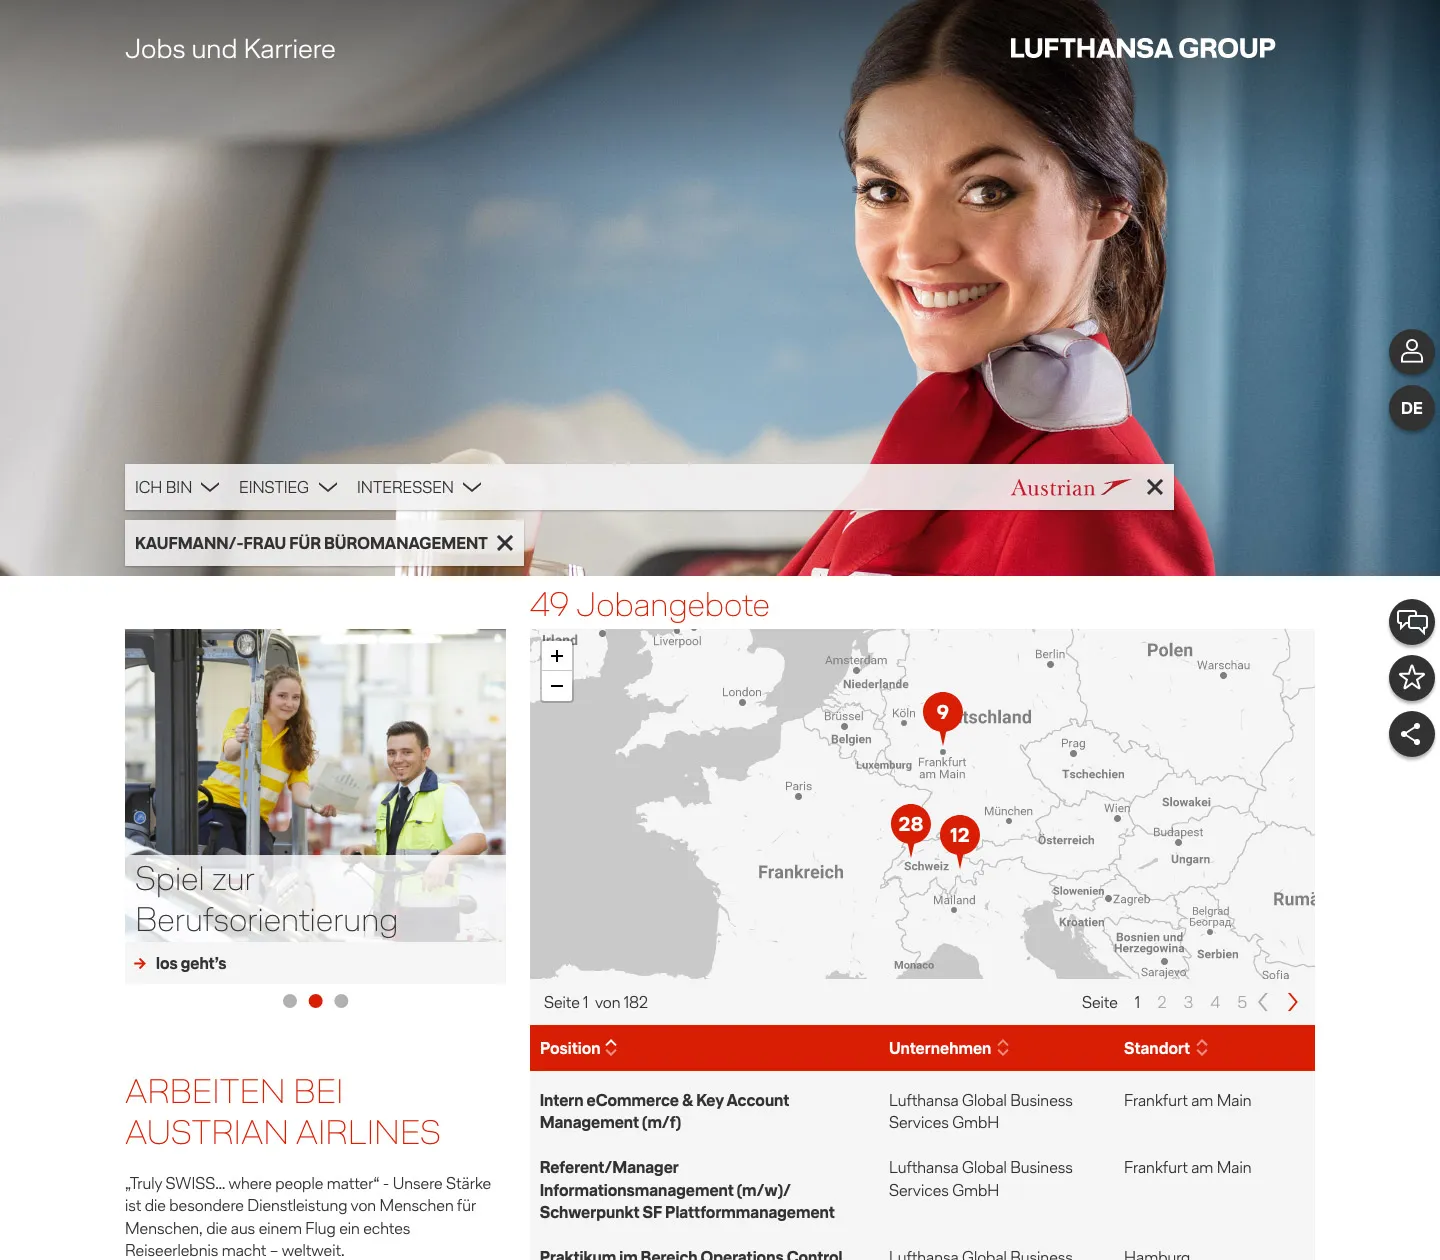 lufthansa group karriere portal austrian airlines